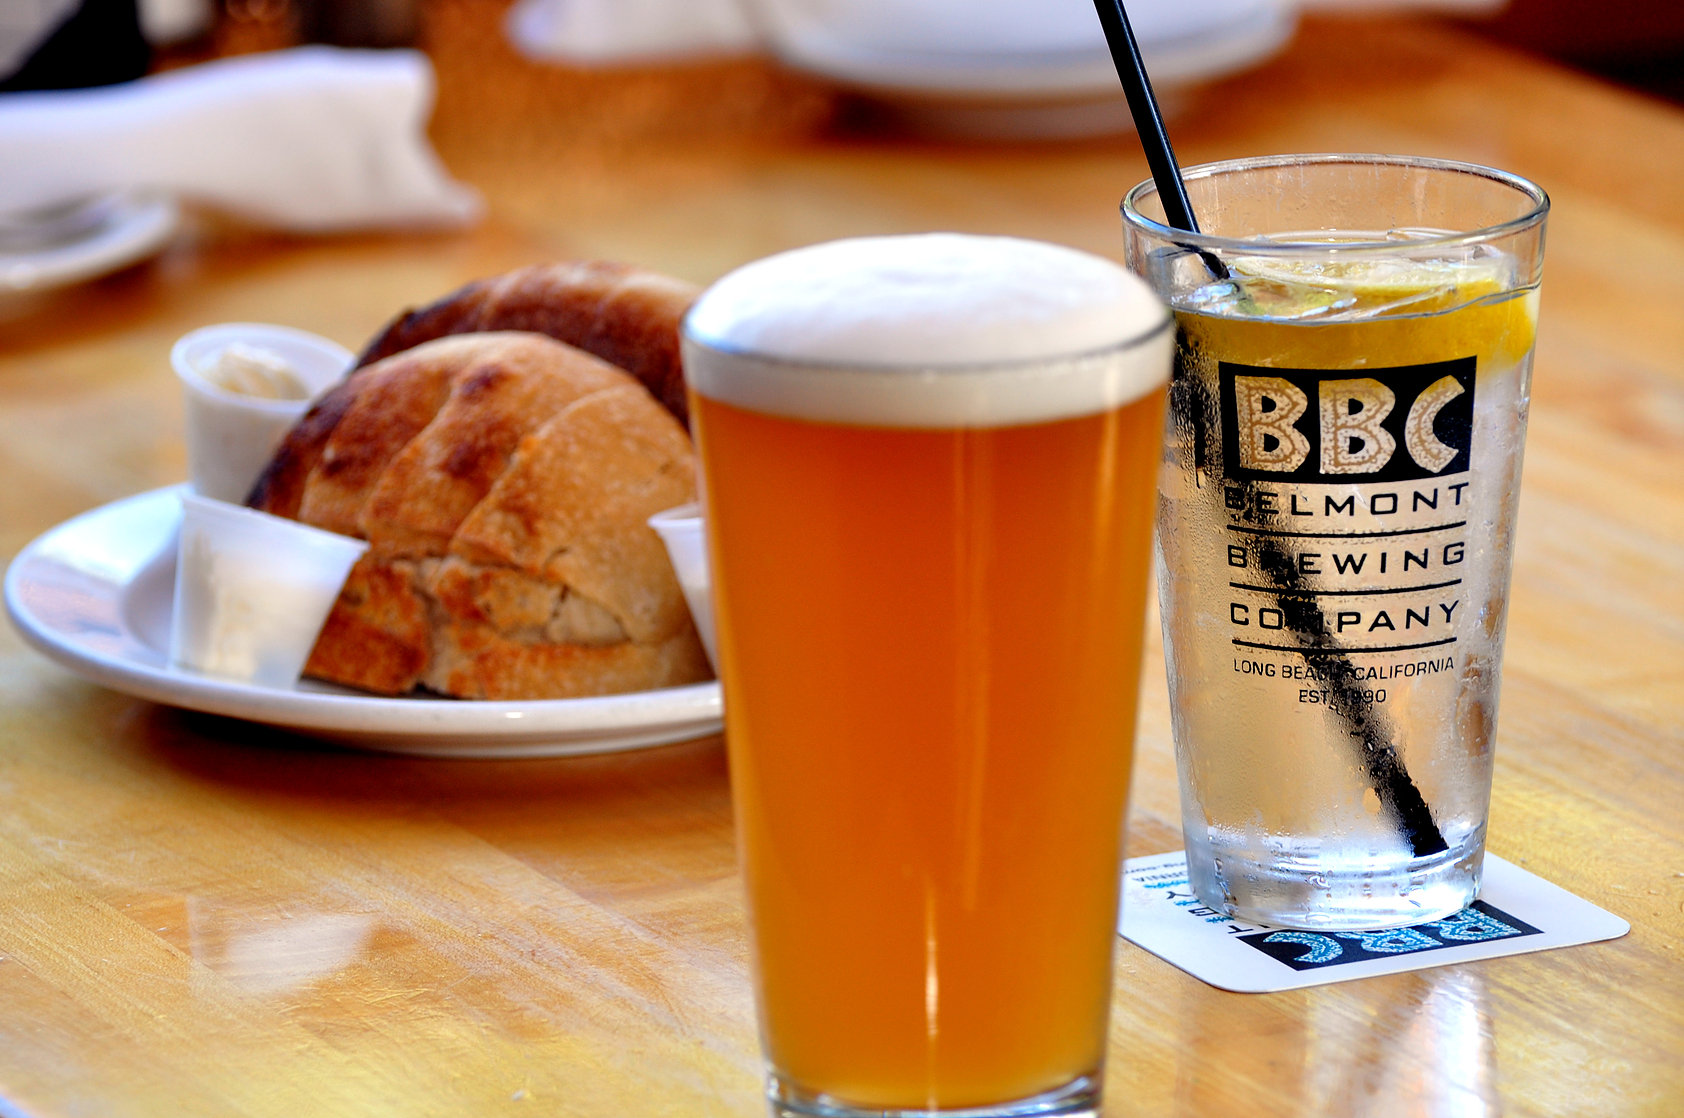 Details about   Matches Matchbook ~<*>~ BELMONT Brewing Co ~ Long Beach CALIFORNIA Beer Brewery 